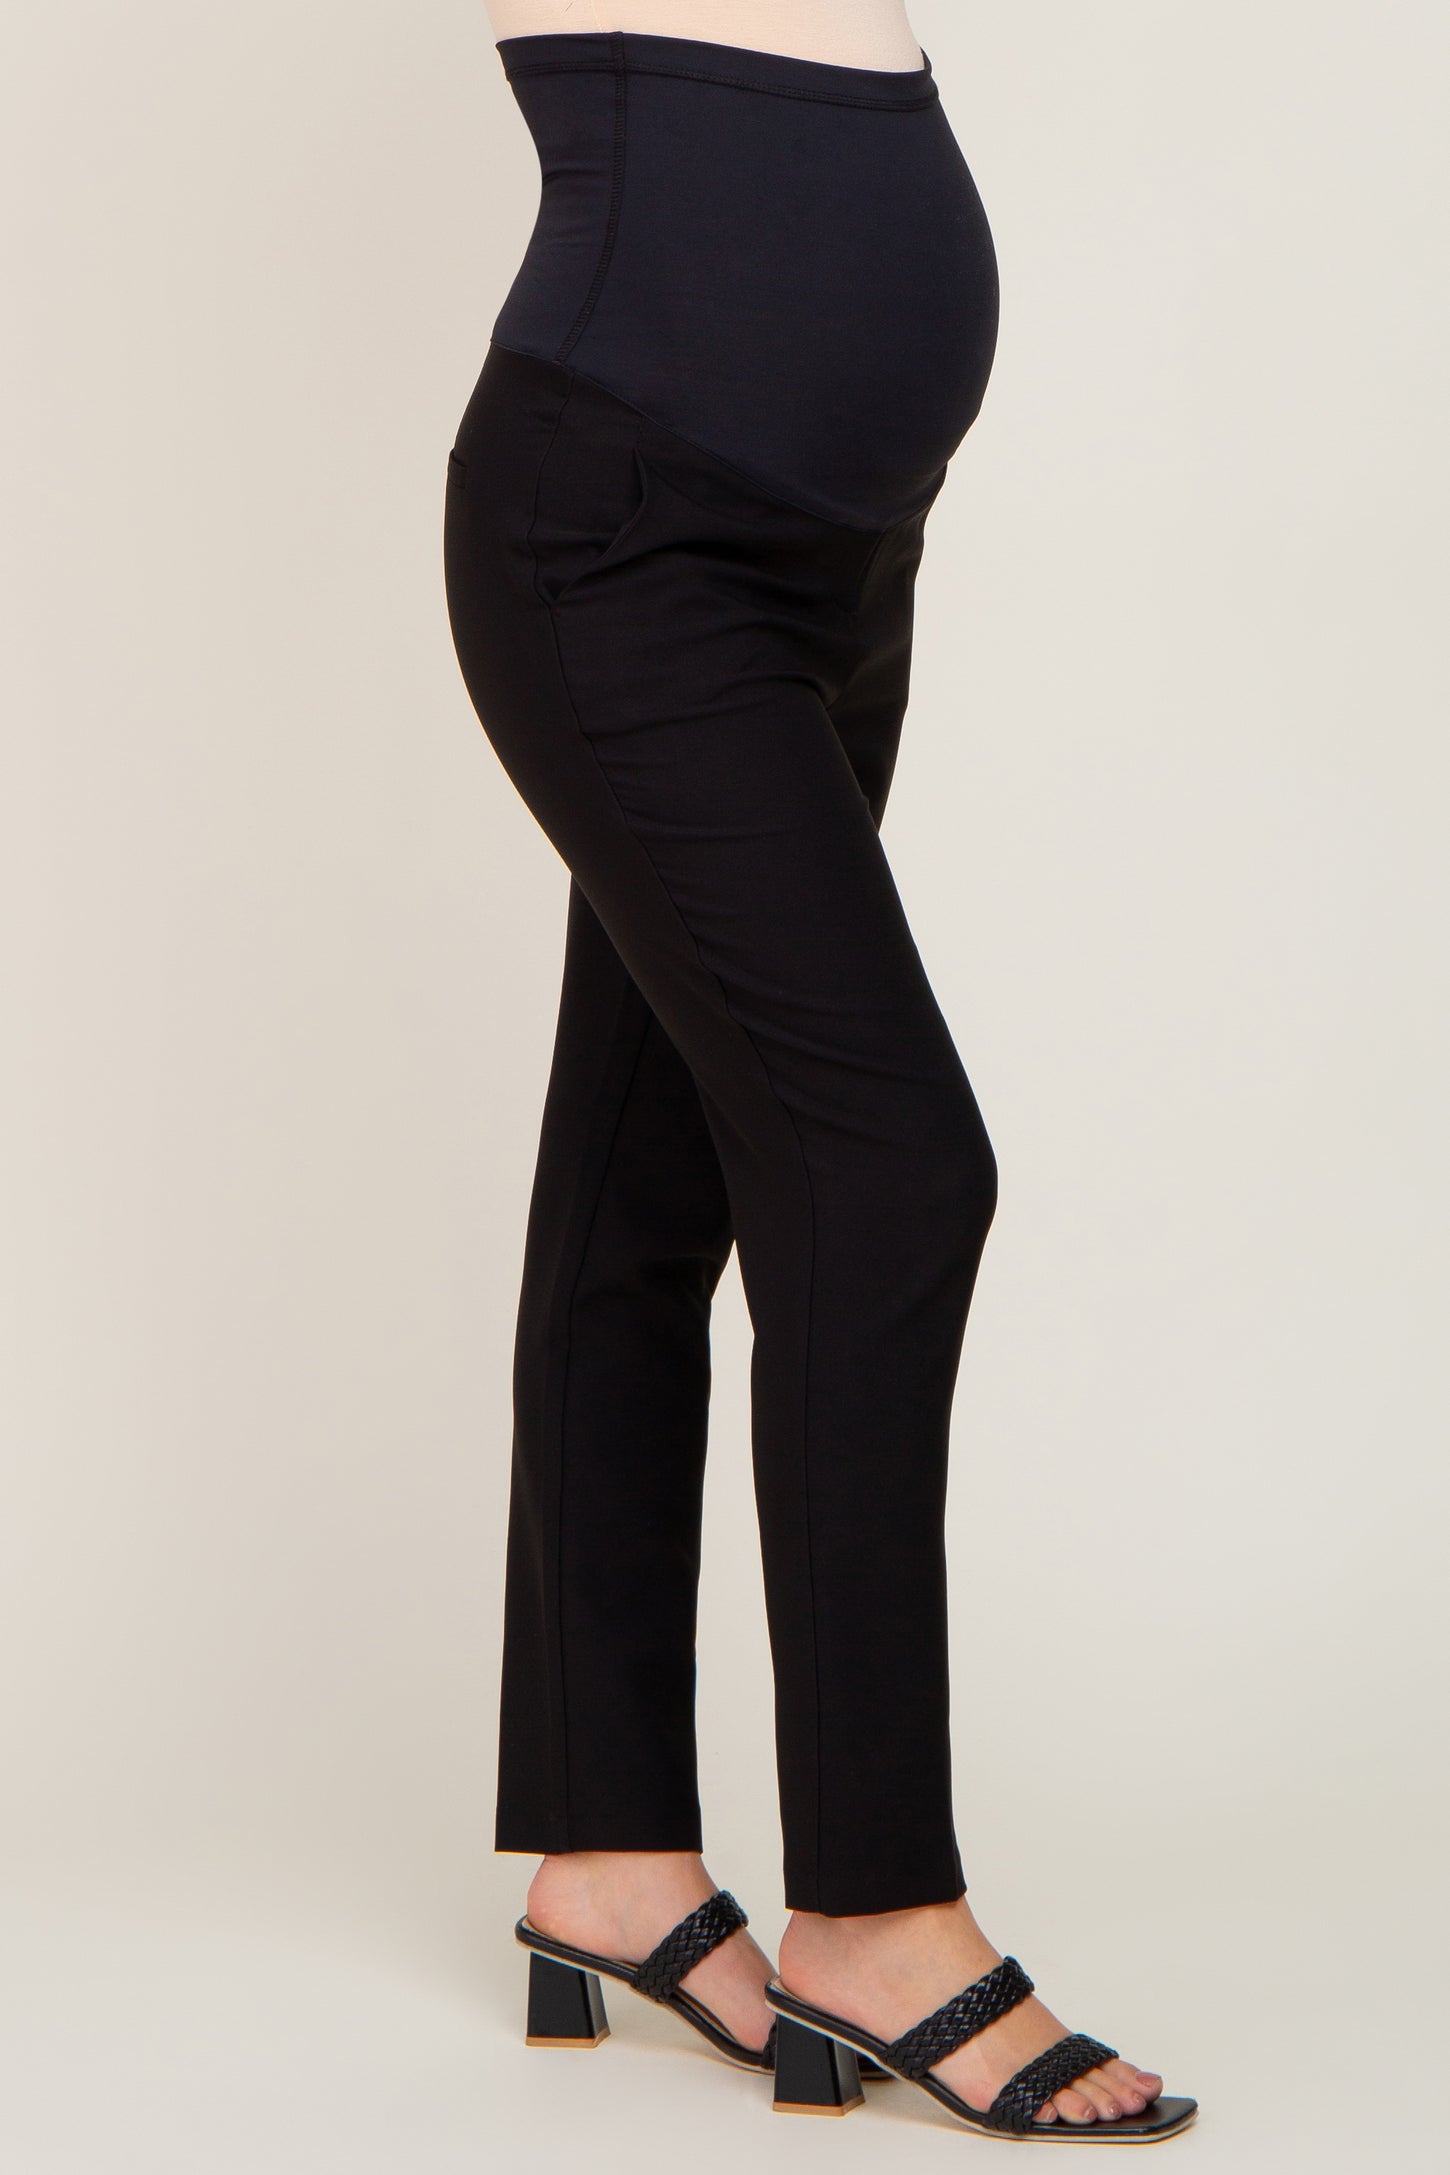 5 Pockets,Petite Womens Straight Leg Yoga Pants Stretch Work Dress Pants  Slim Fit,27,Charcoal,Size XS